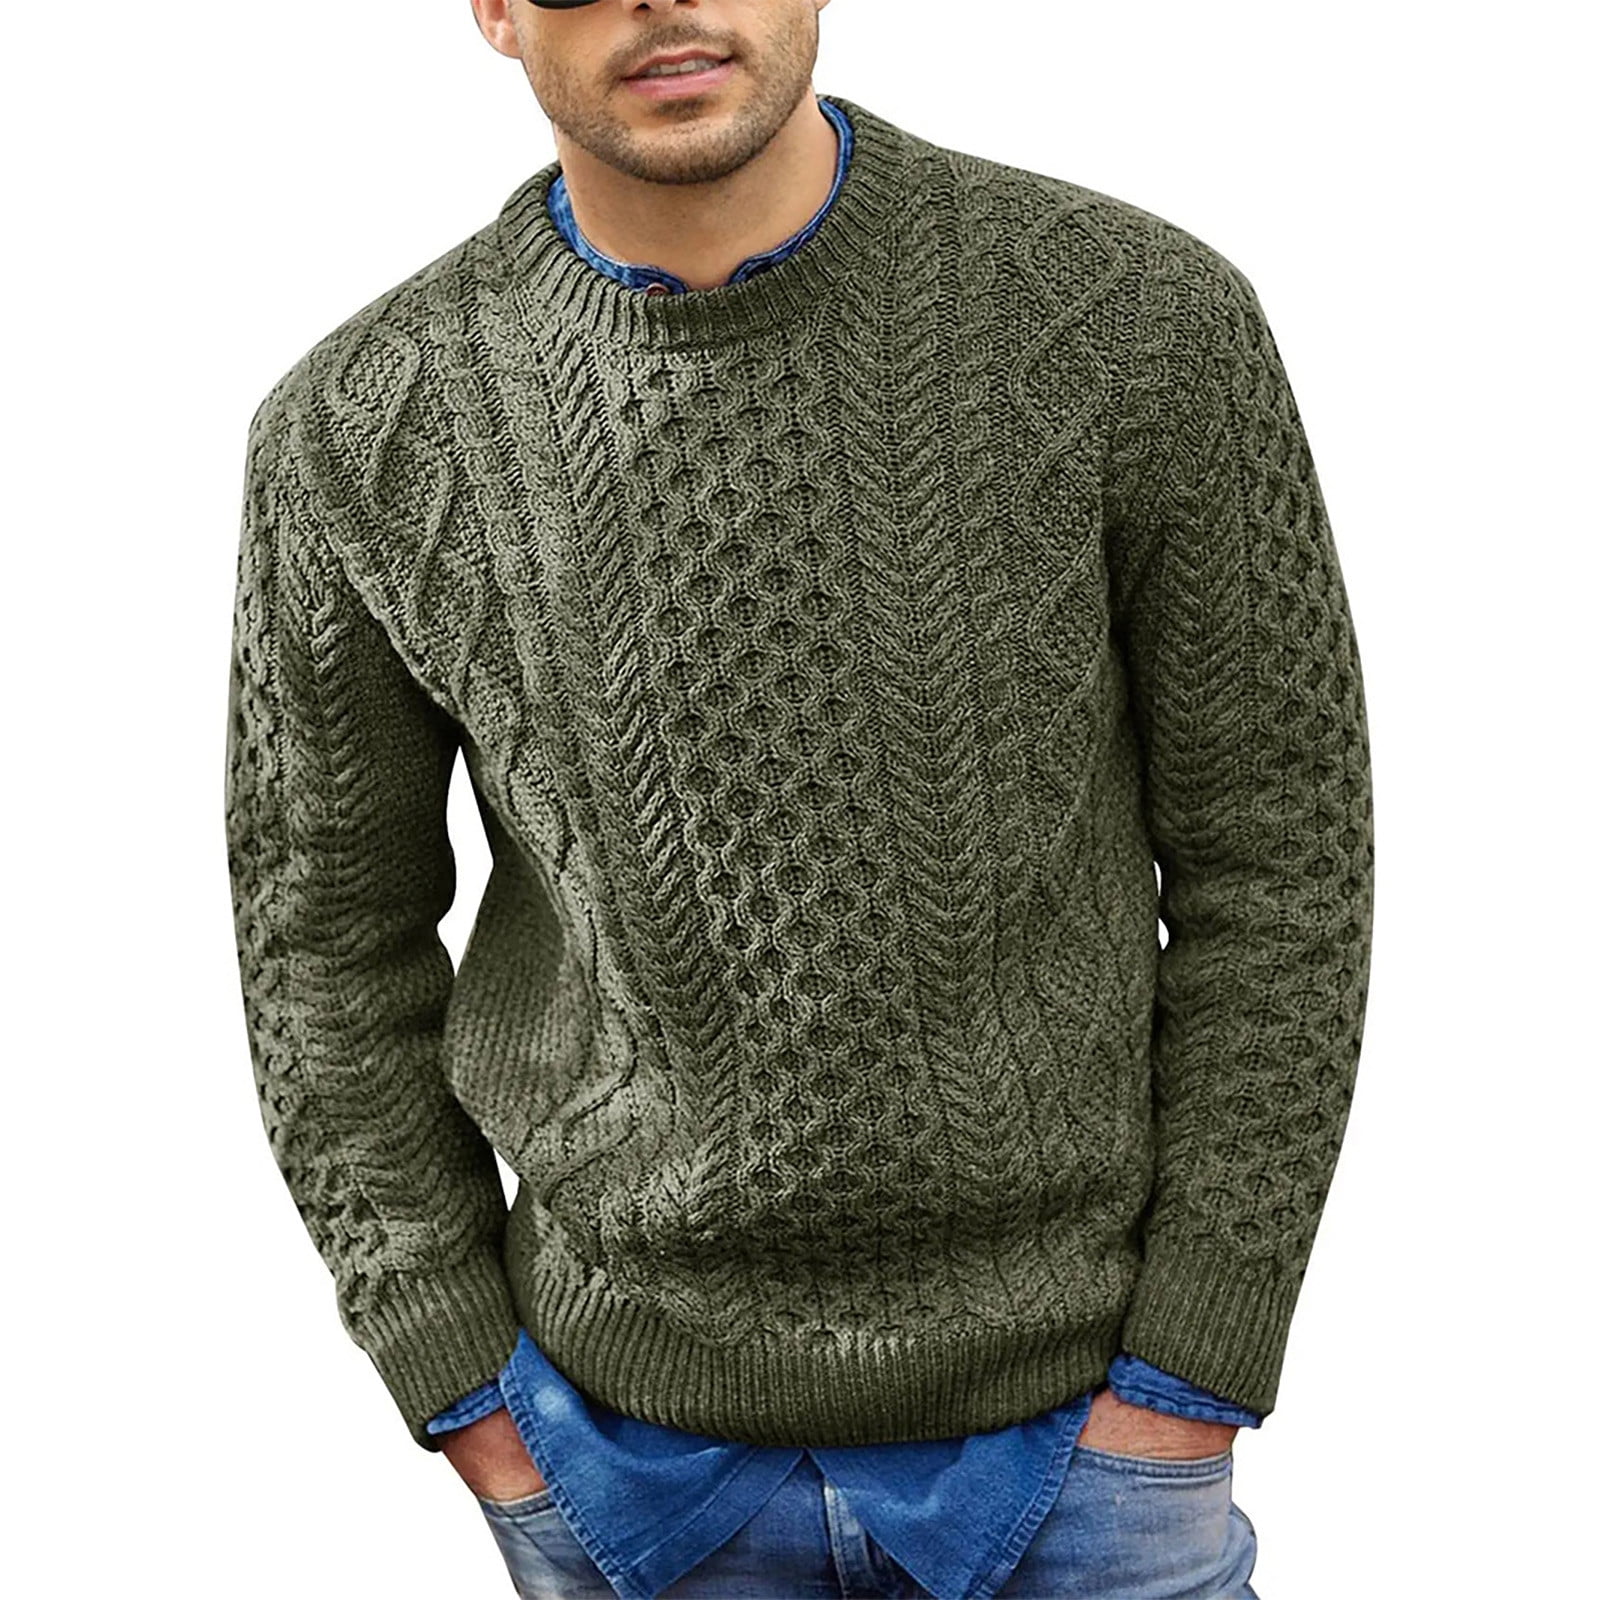 Podplug Fashion Mens Knitted Sweater, Men's Sweater Solid Fashion Round ...